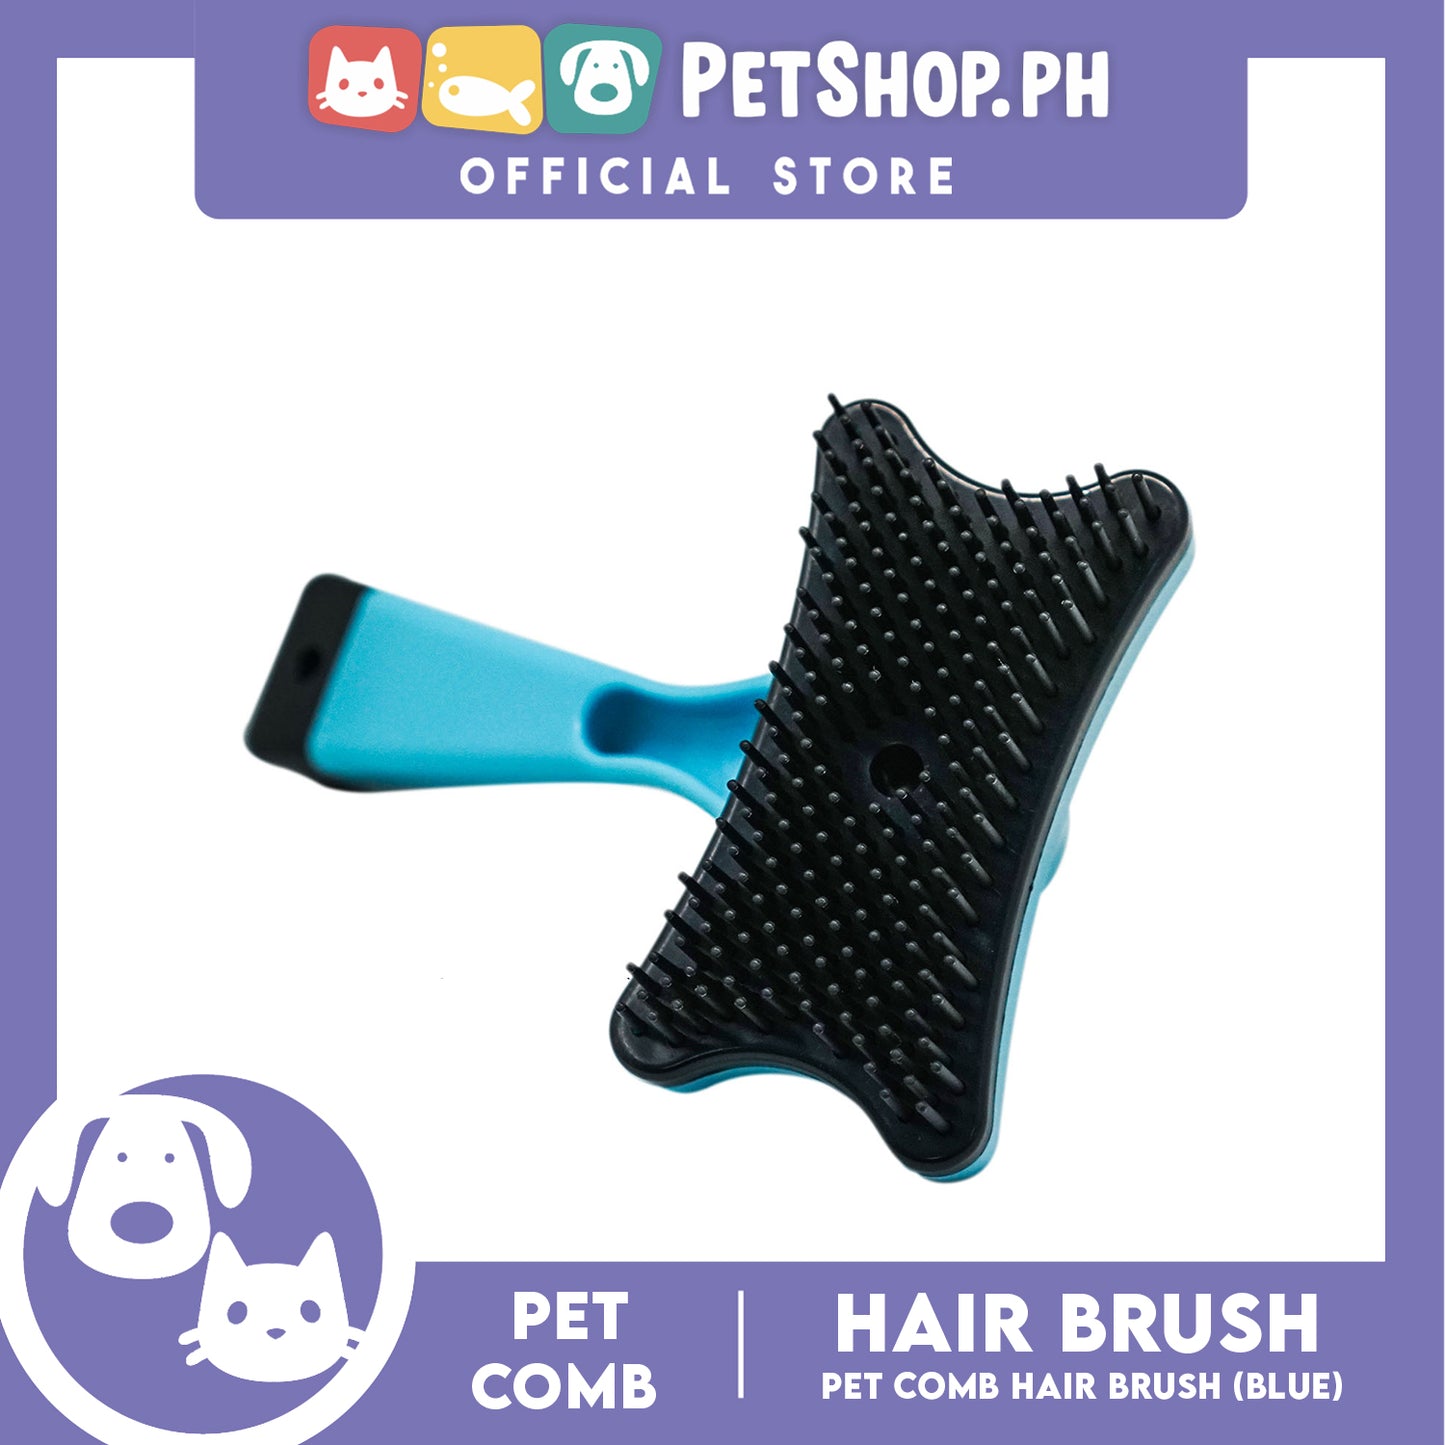 Pet Dog Cat Hair Fur Shedding Trimmer Grooming Professional Comb Brush Tool (BLUE)